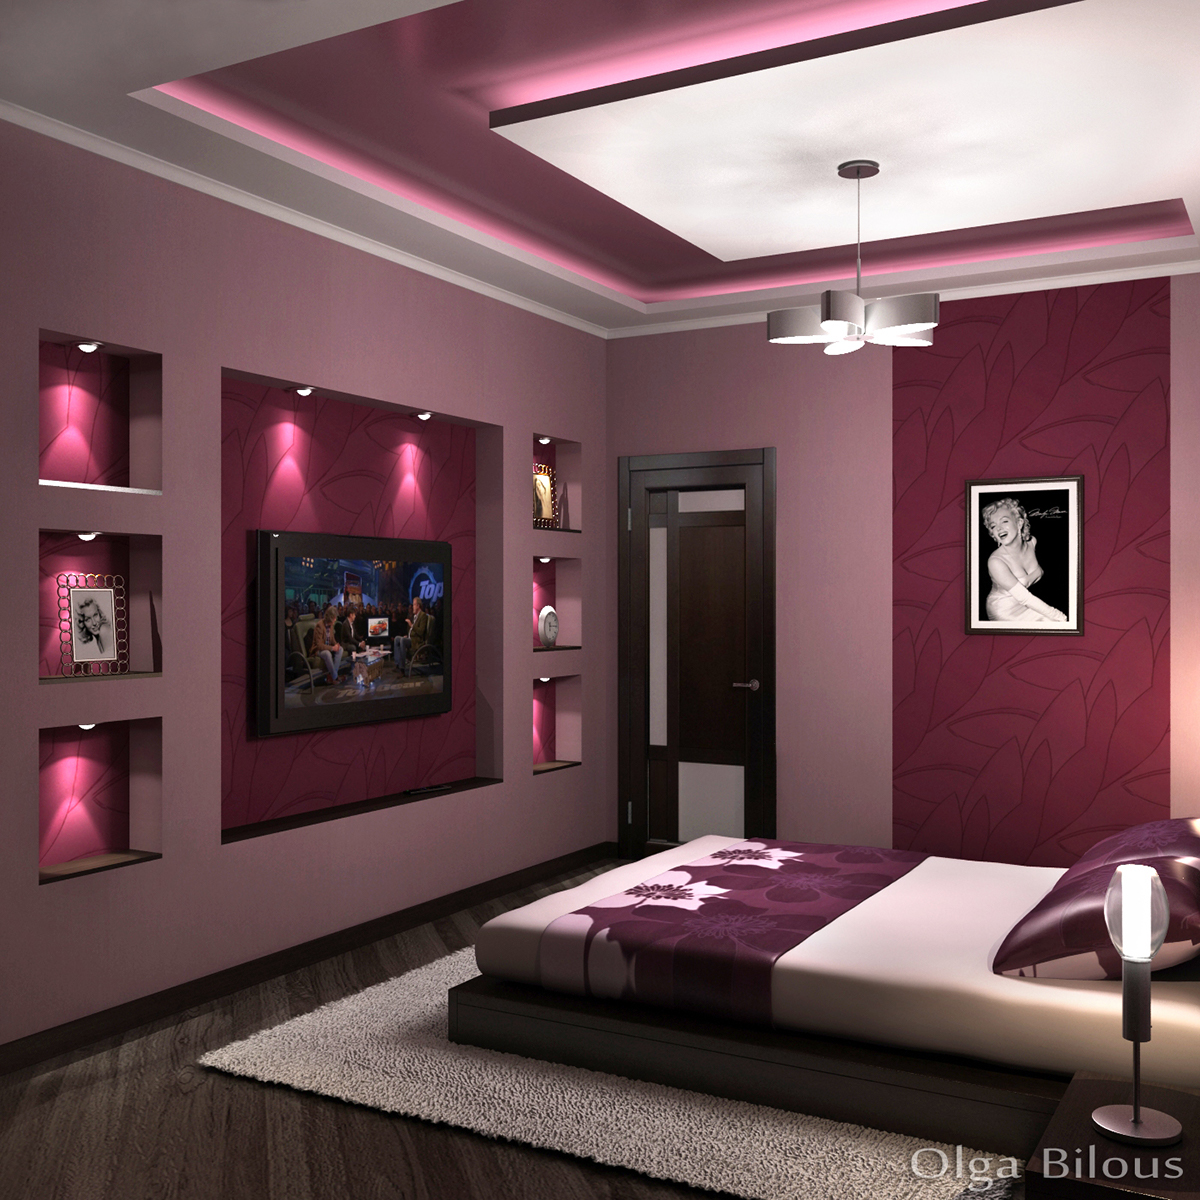 Interior design bedroom house 3D Render visualiation